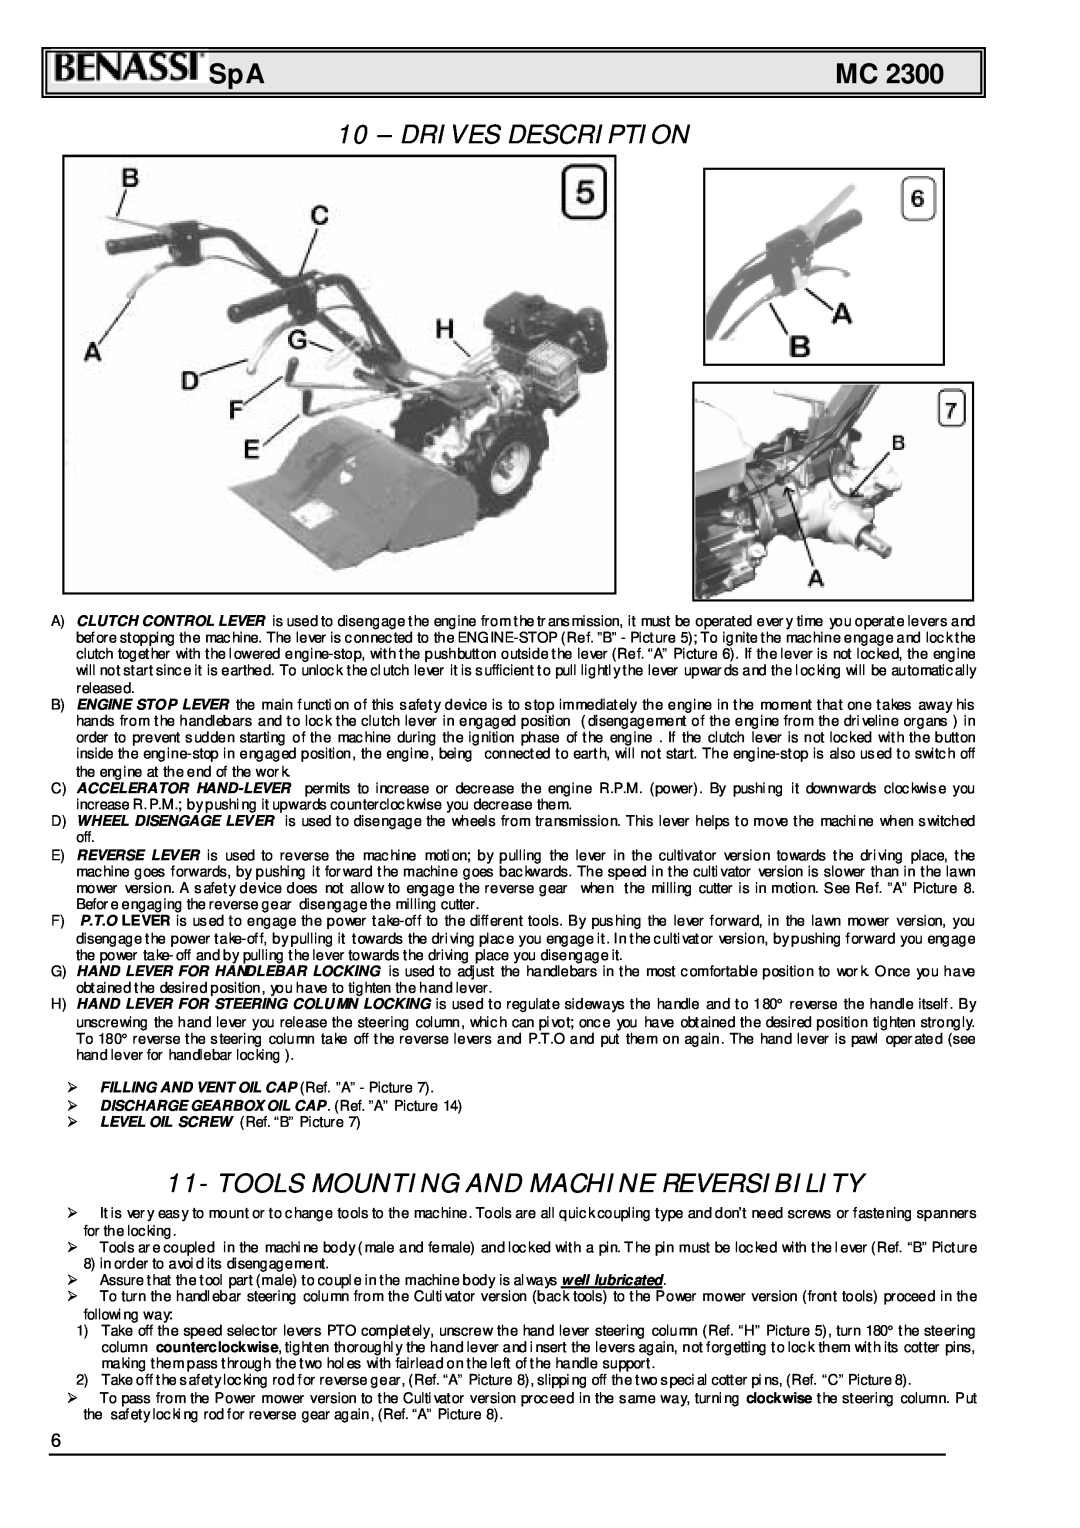 Briggs & Stratton MC 2300 manual Drives Description, Tools Mounting And Machine Reversibility 